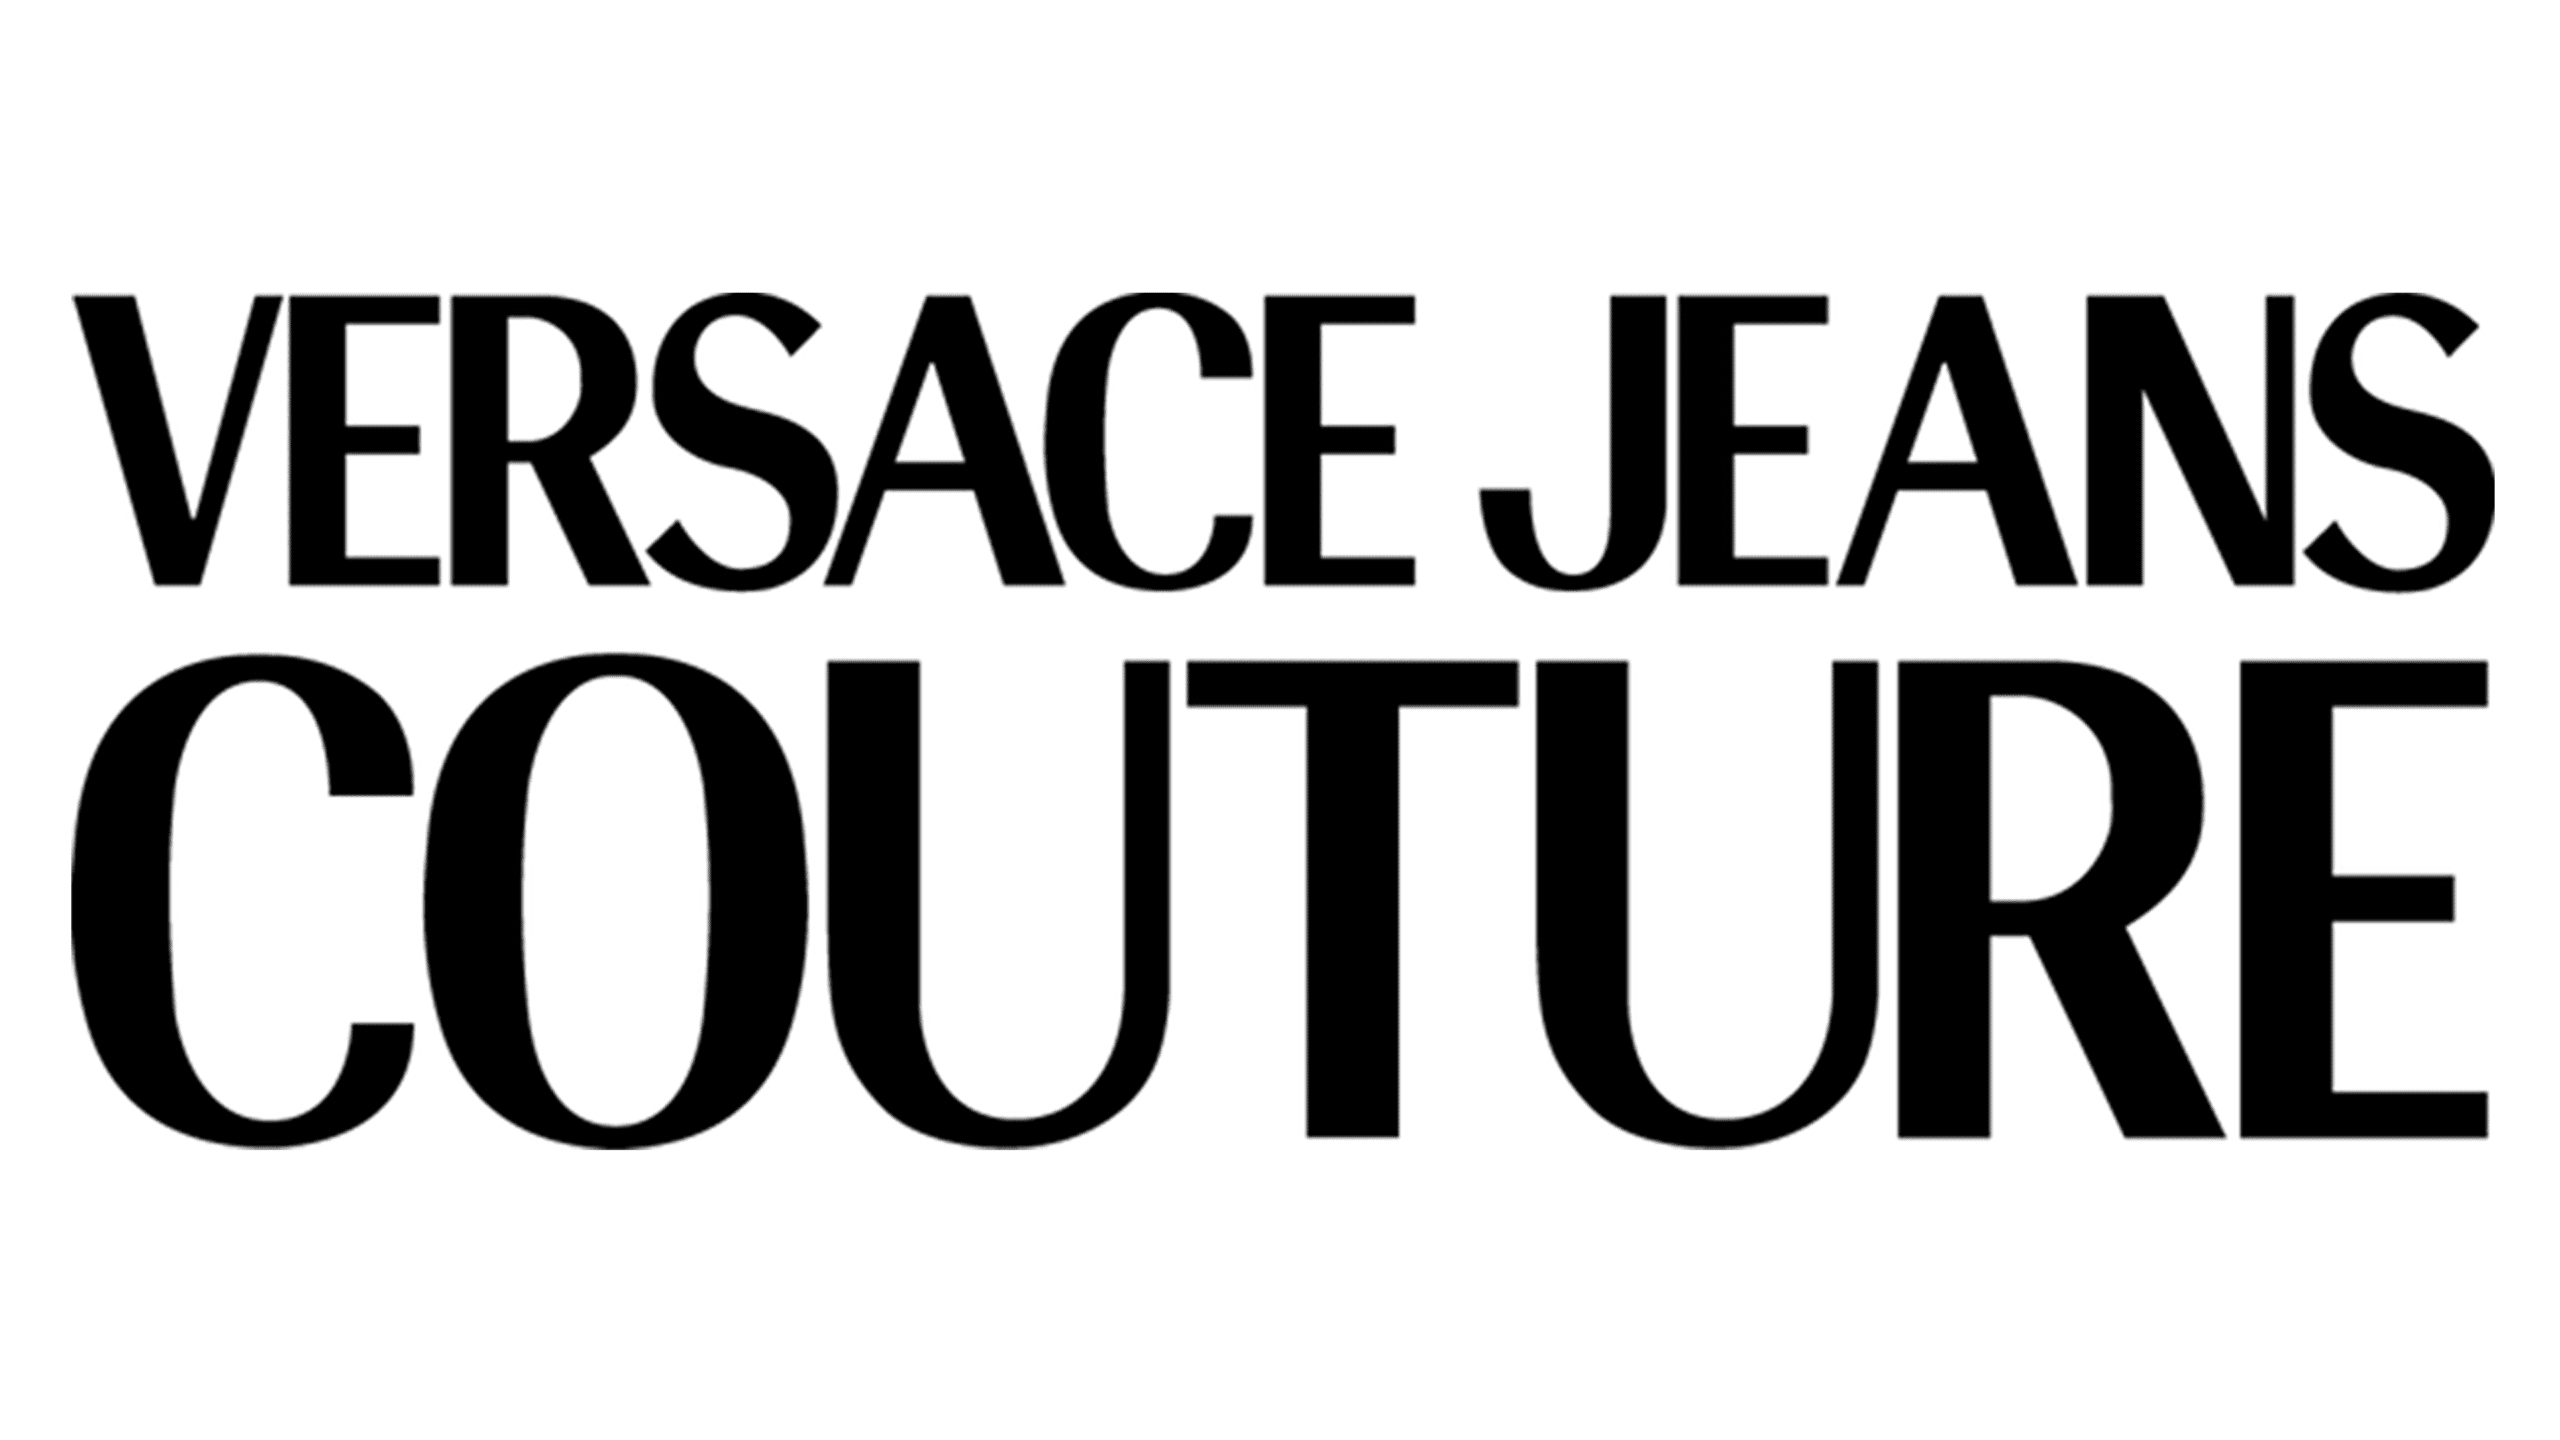 Versace-Jeans-logo